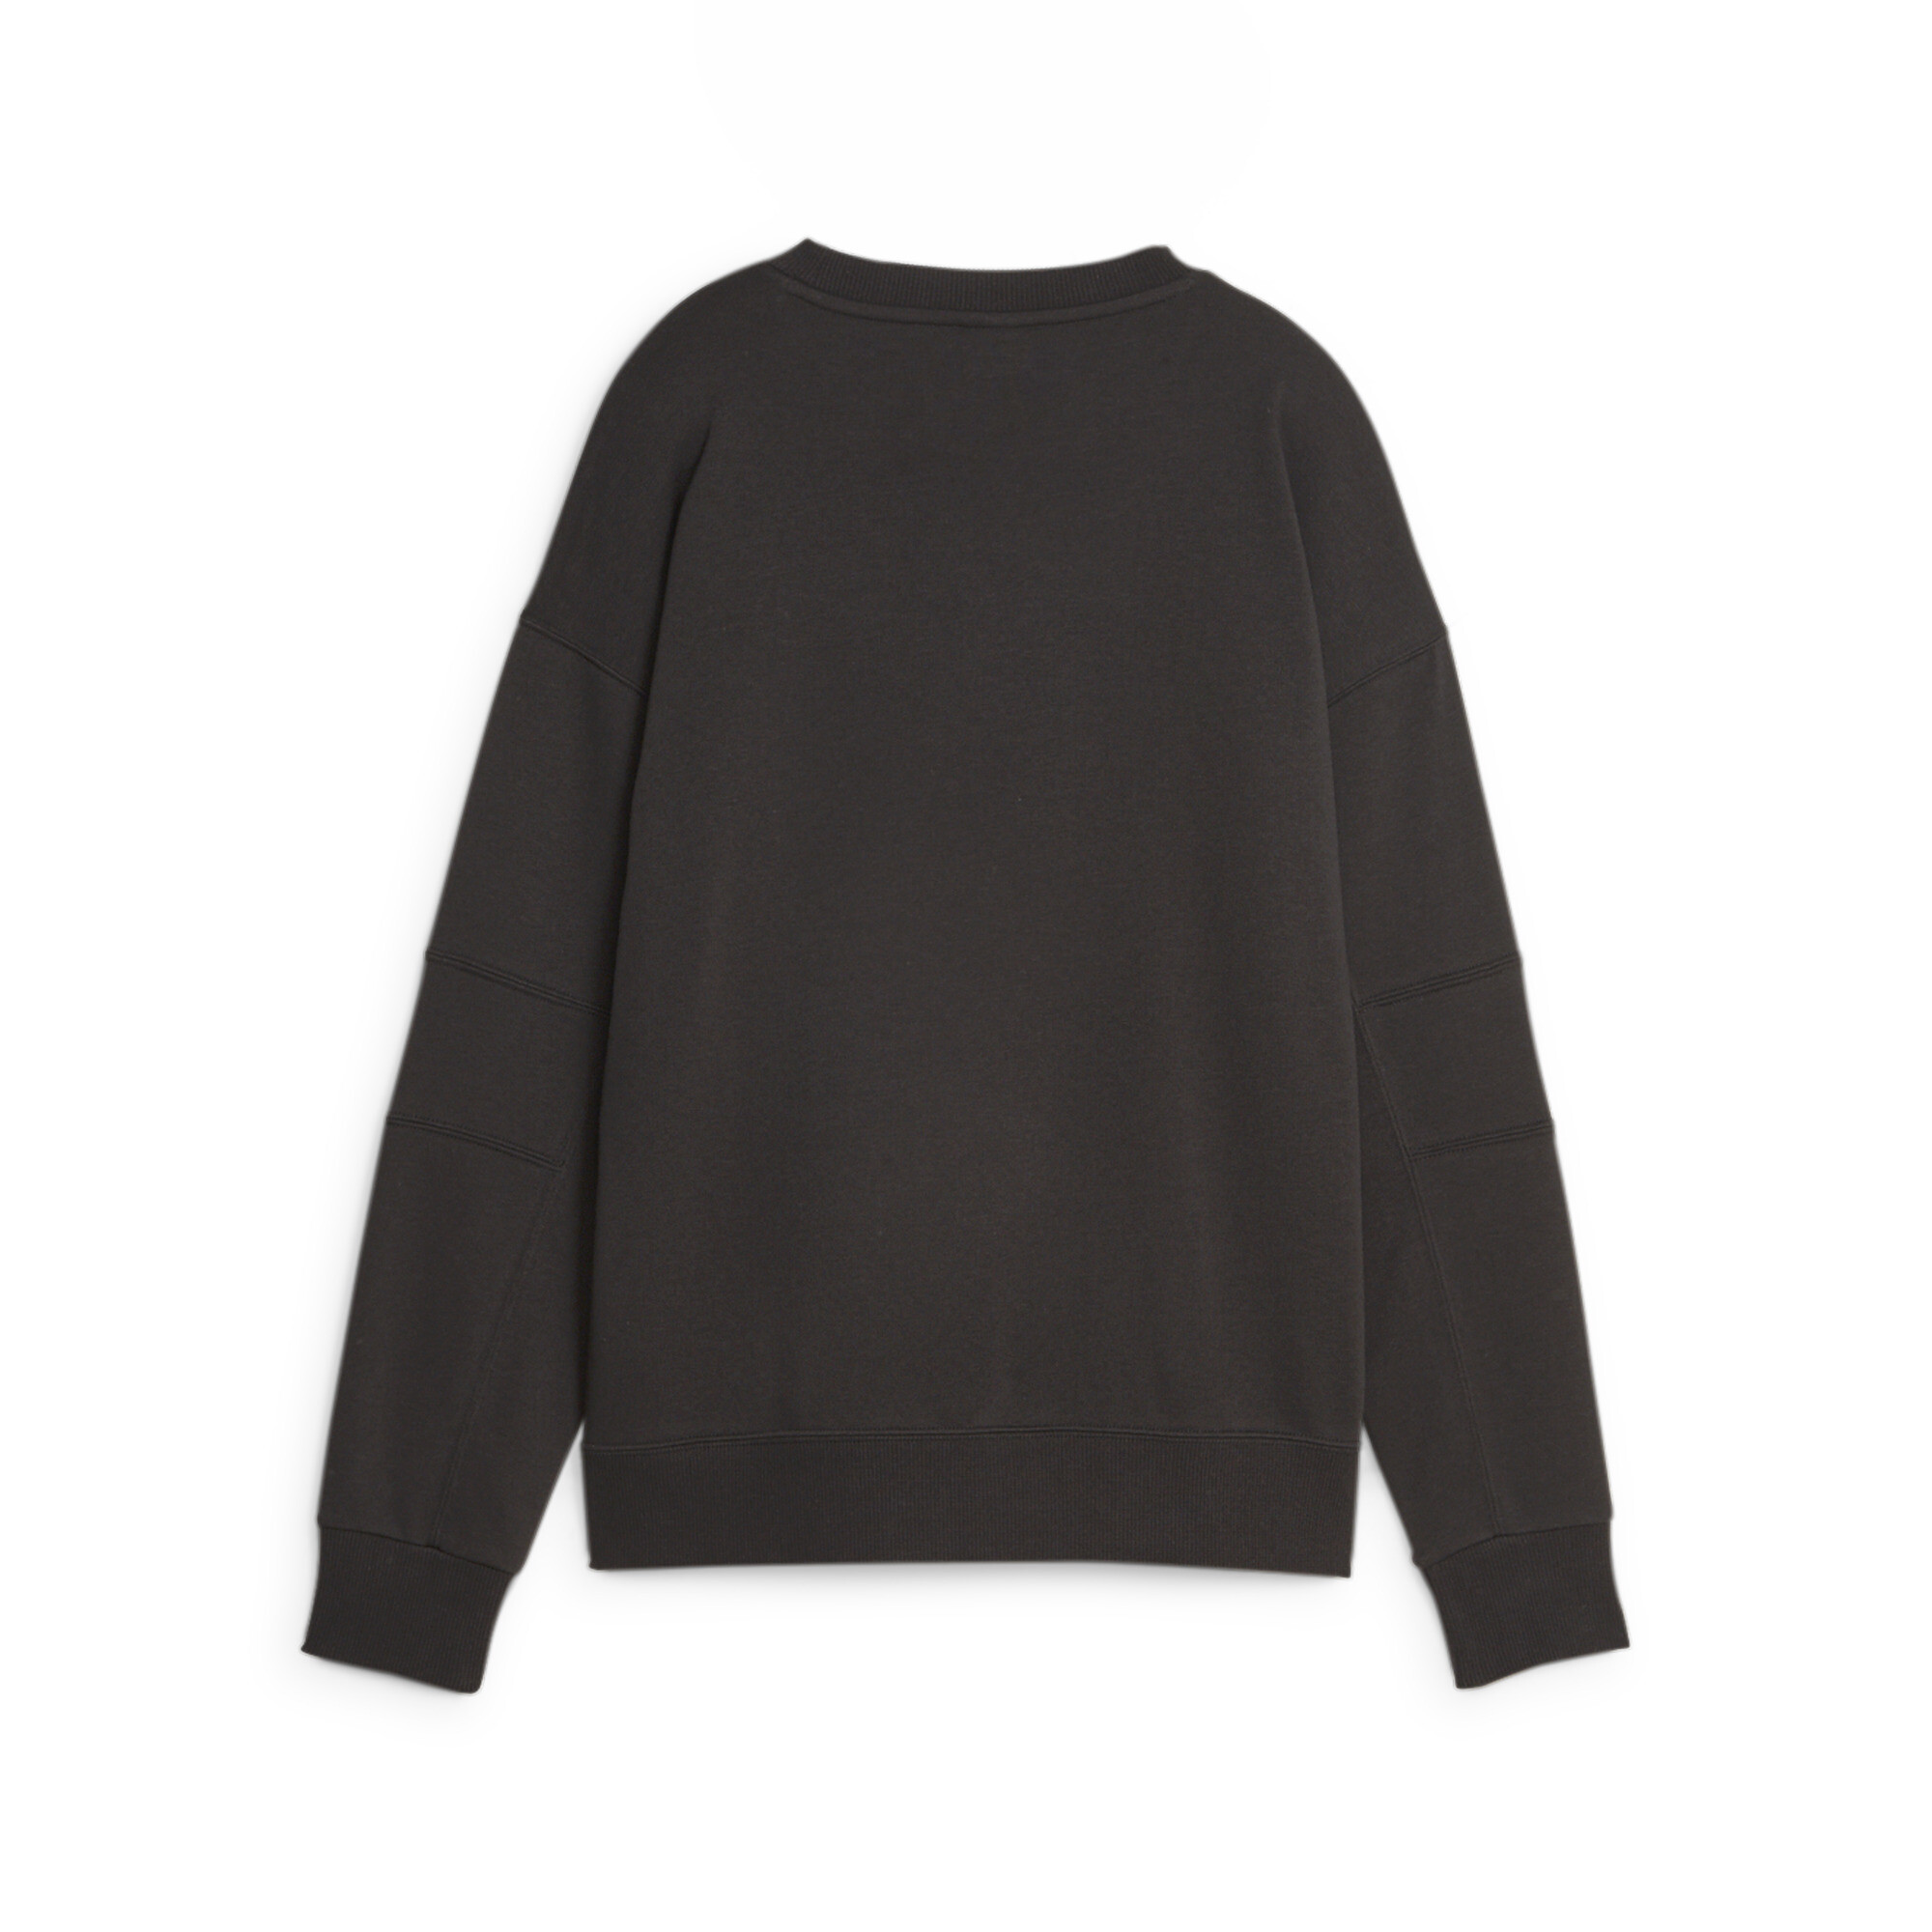 Women's PUMA TEAM Sweatshirt In Black, Size Large